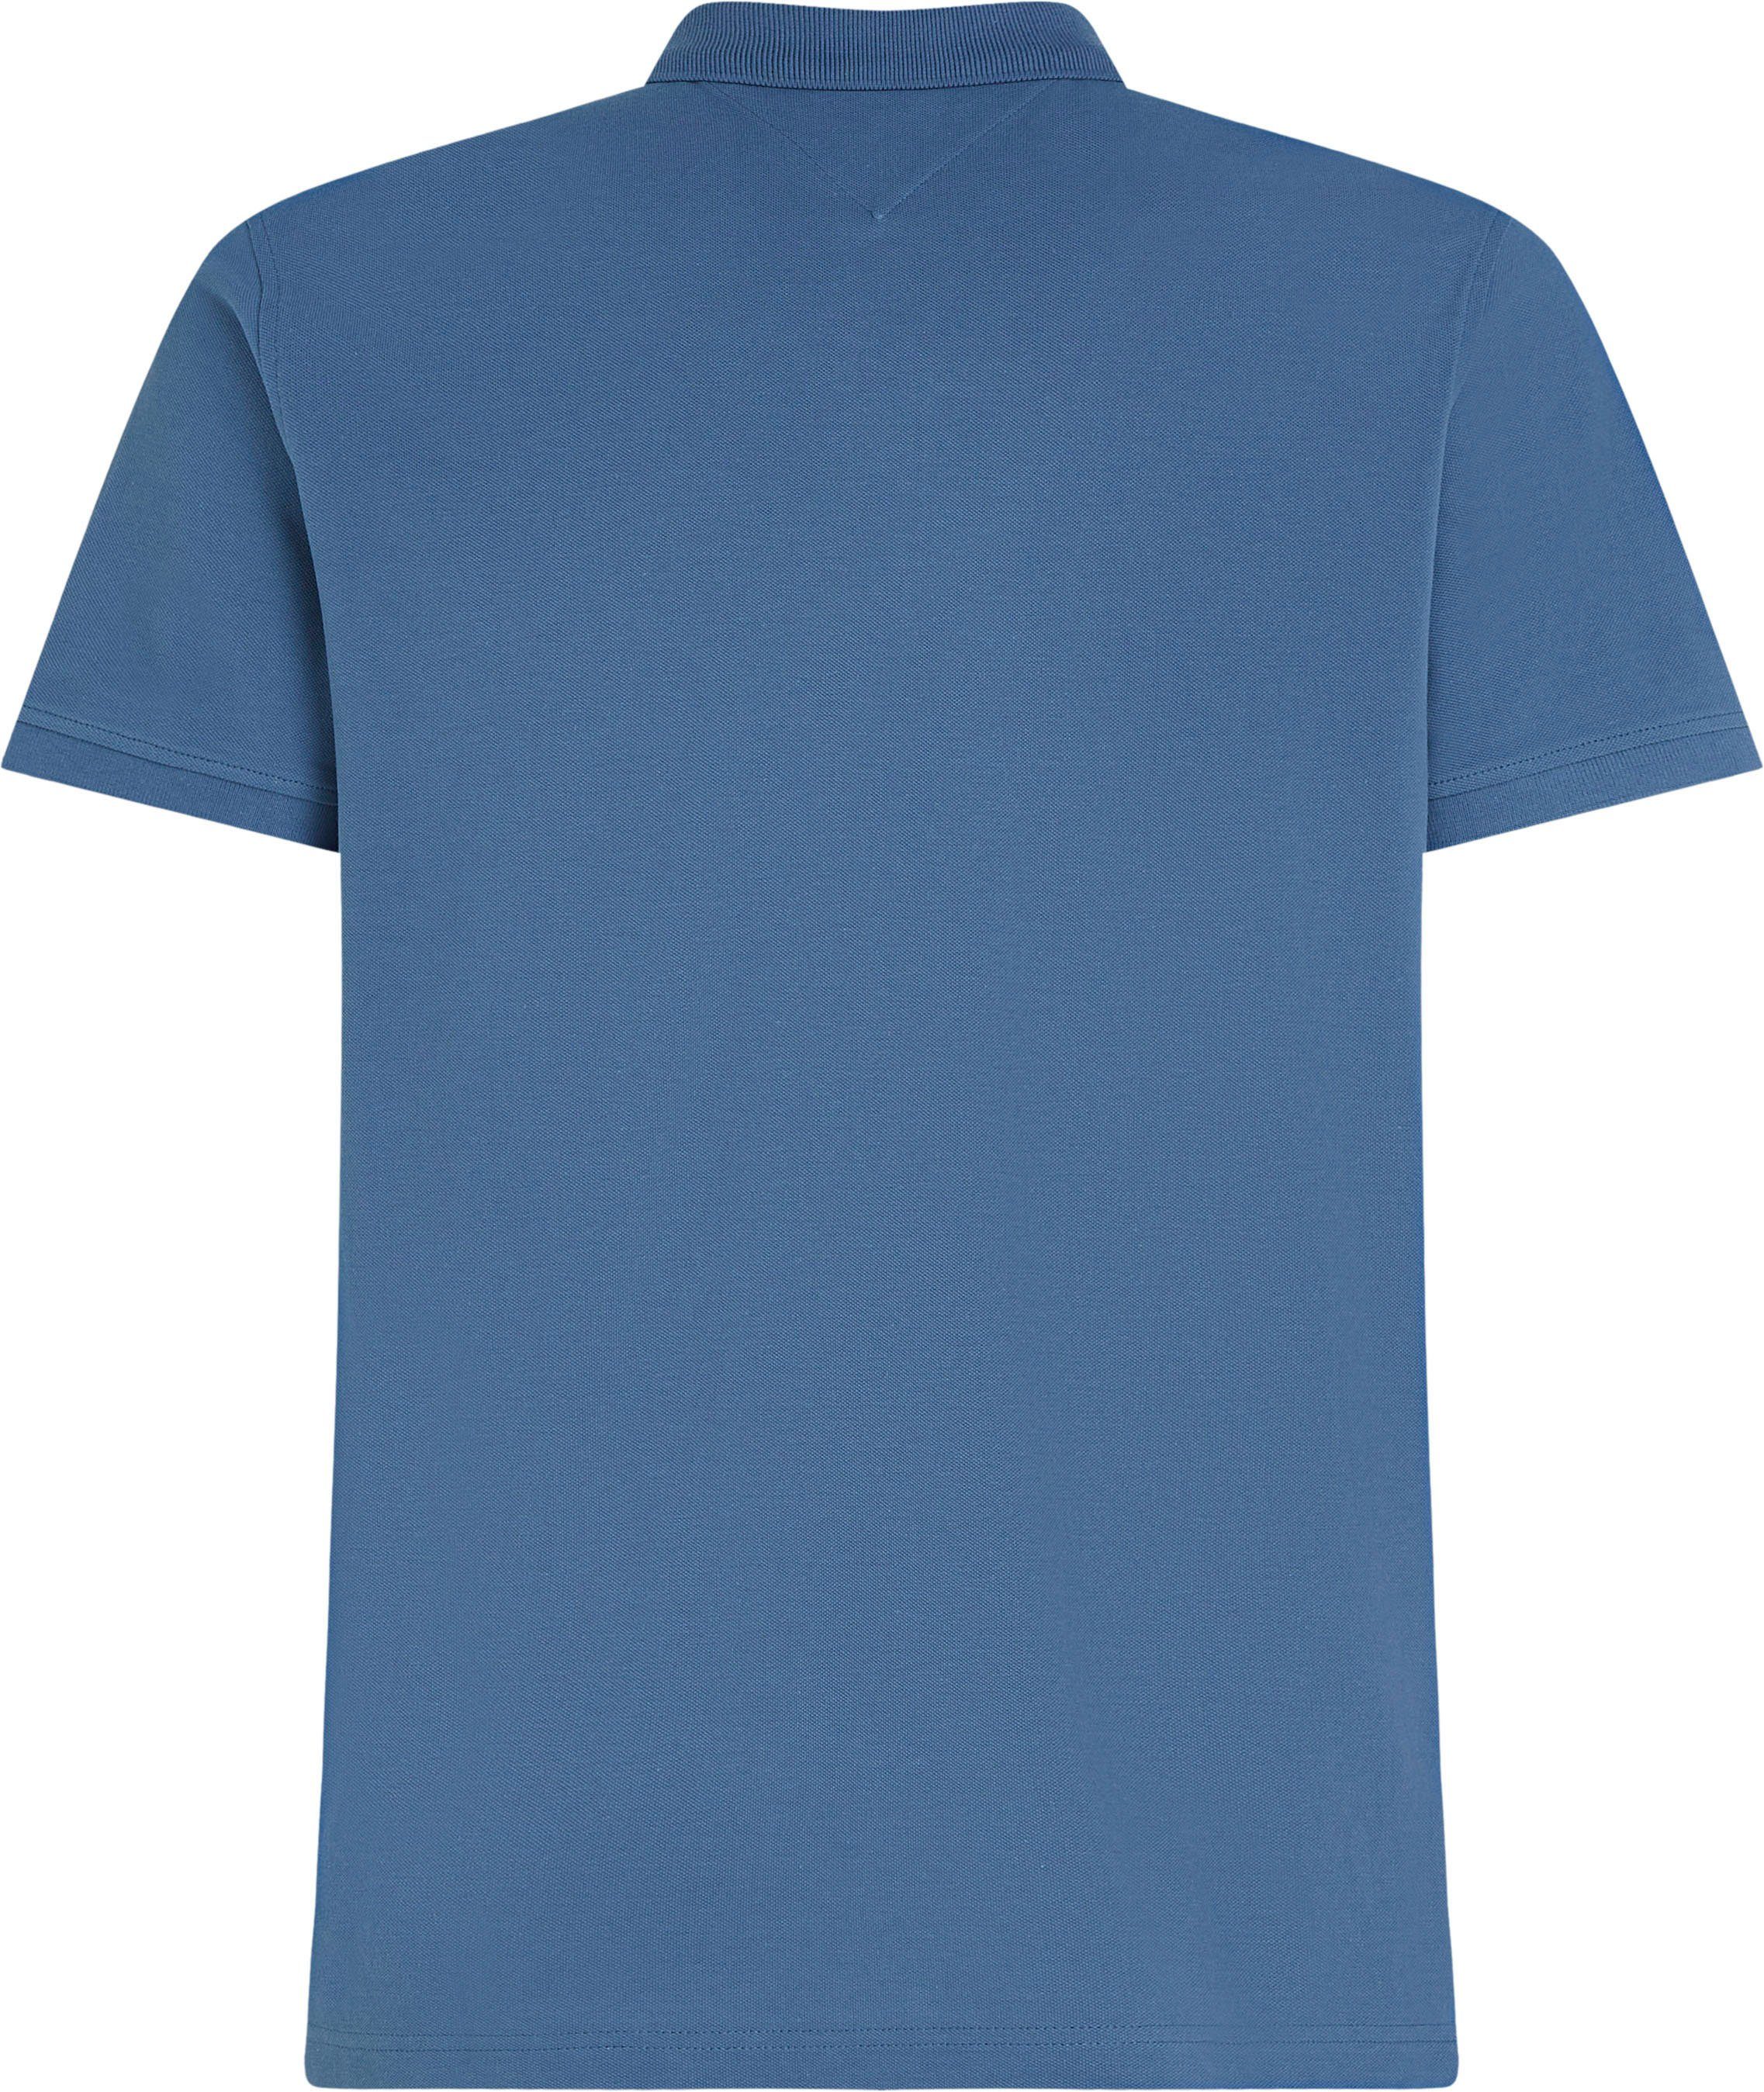 PLACKET mit Poloshirt hinterlegter Knopfleiste kontrastfarben Blue Hilfiger REG Coast POLO Tommy CONTRAST